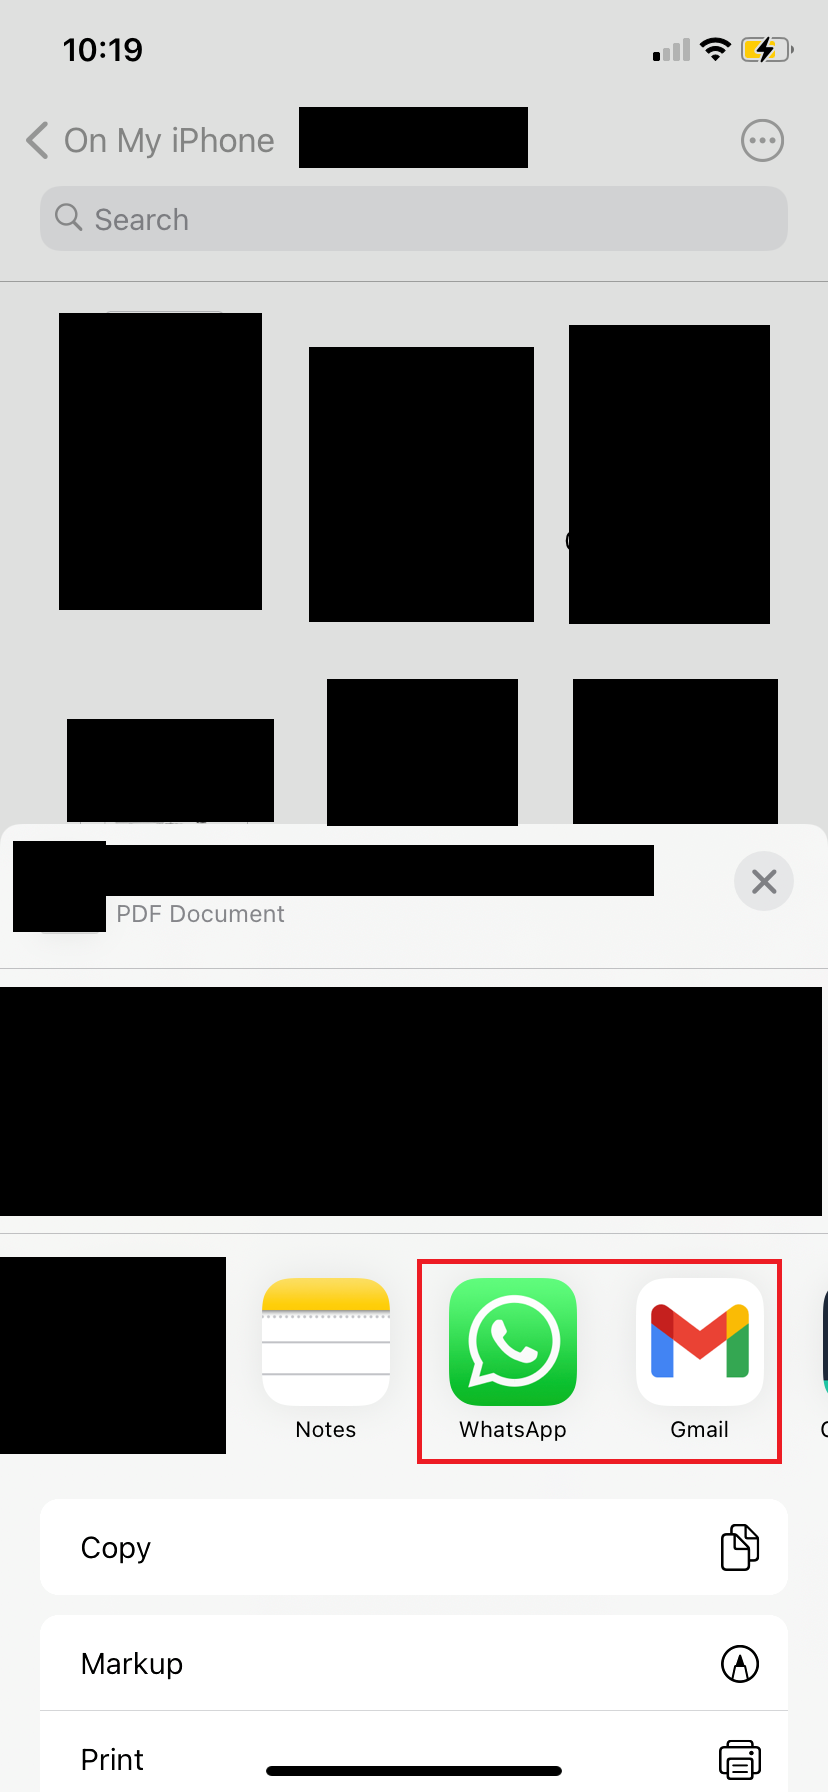 screenshot of choosing whatsapp to send PDF in iphone